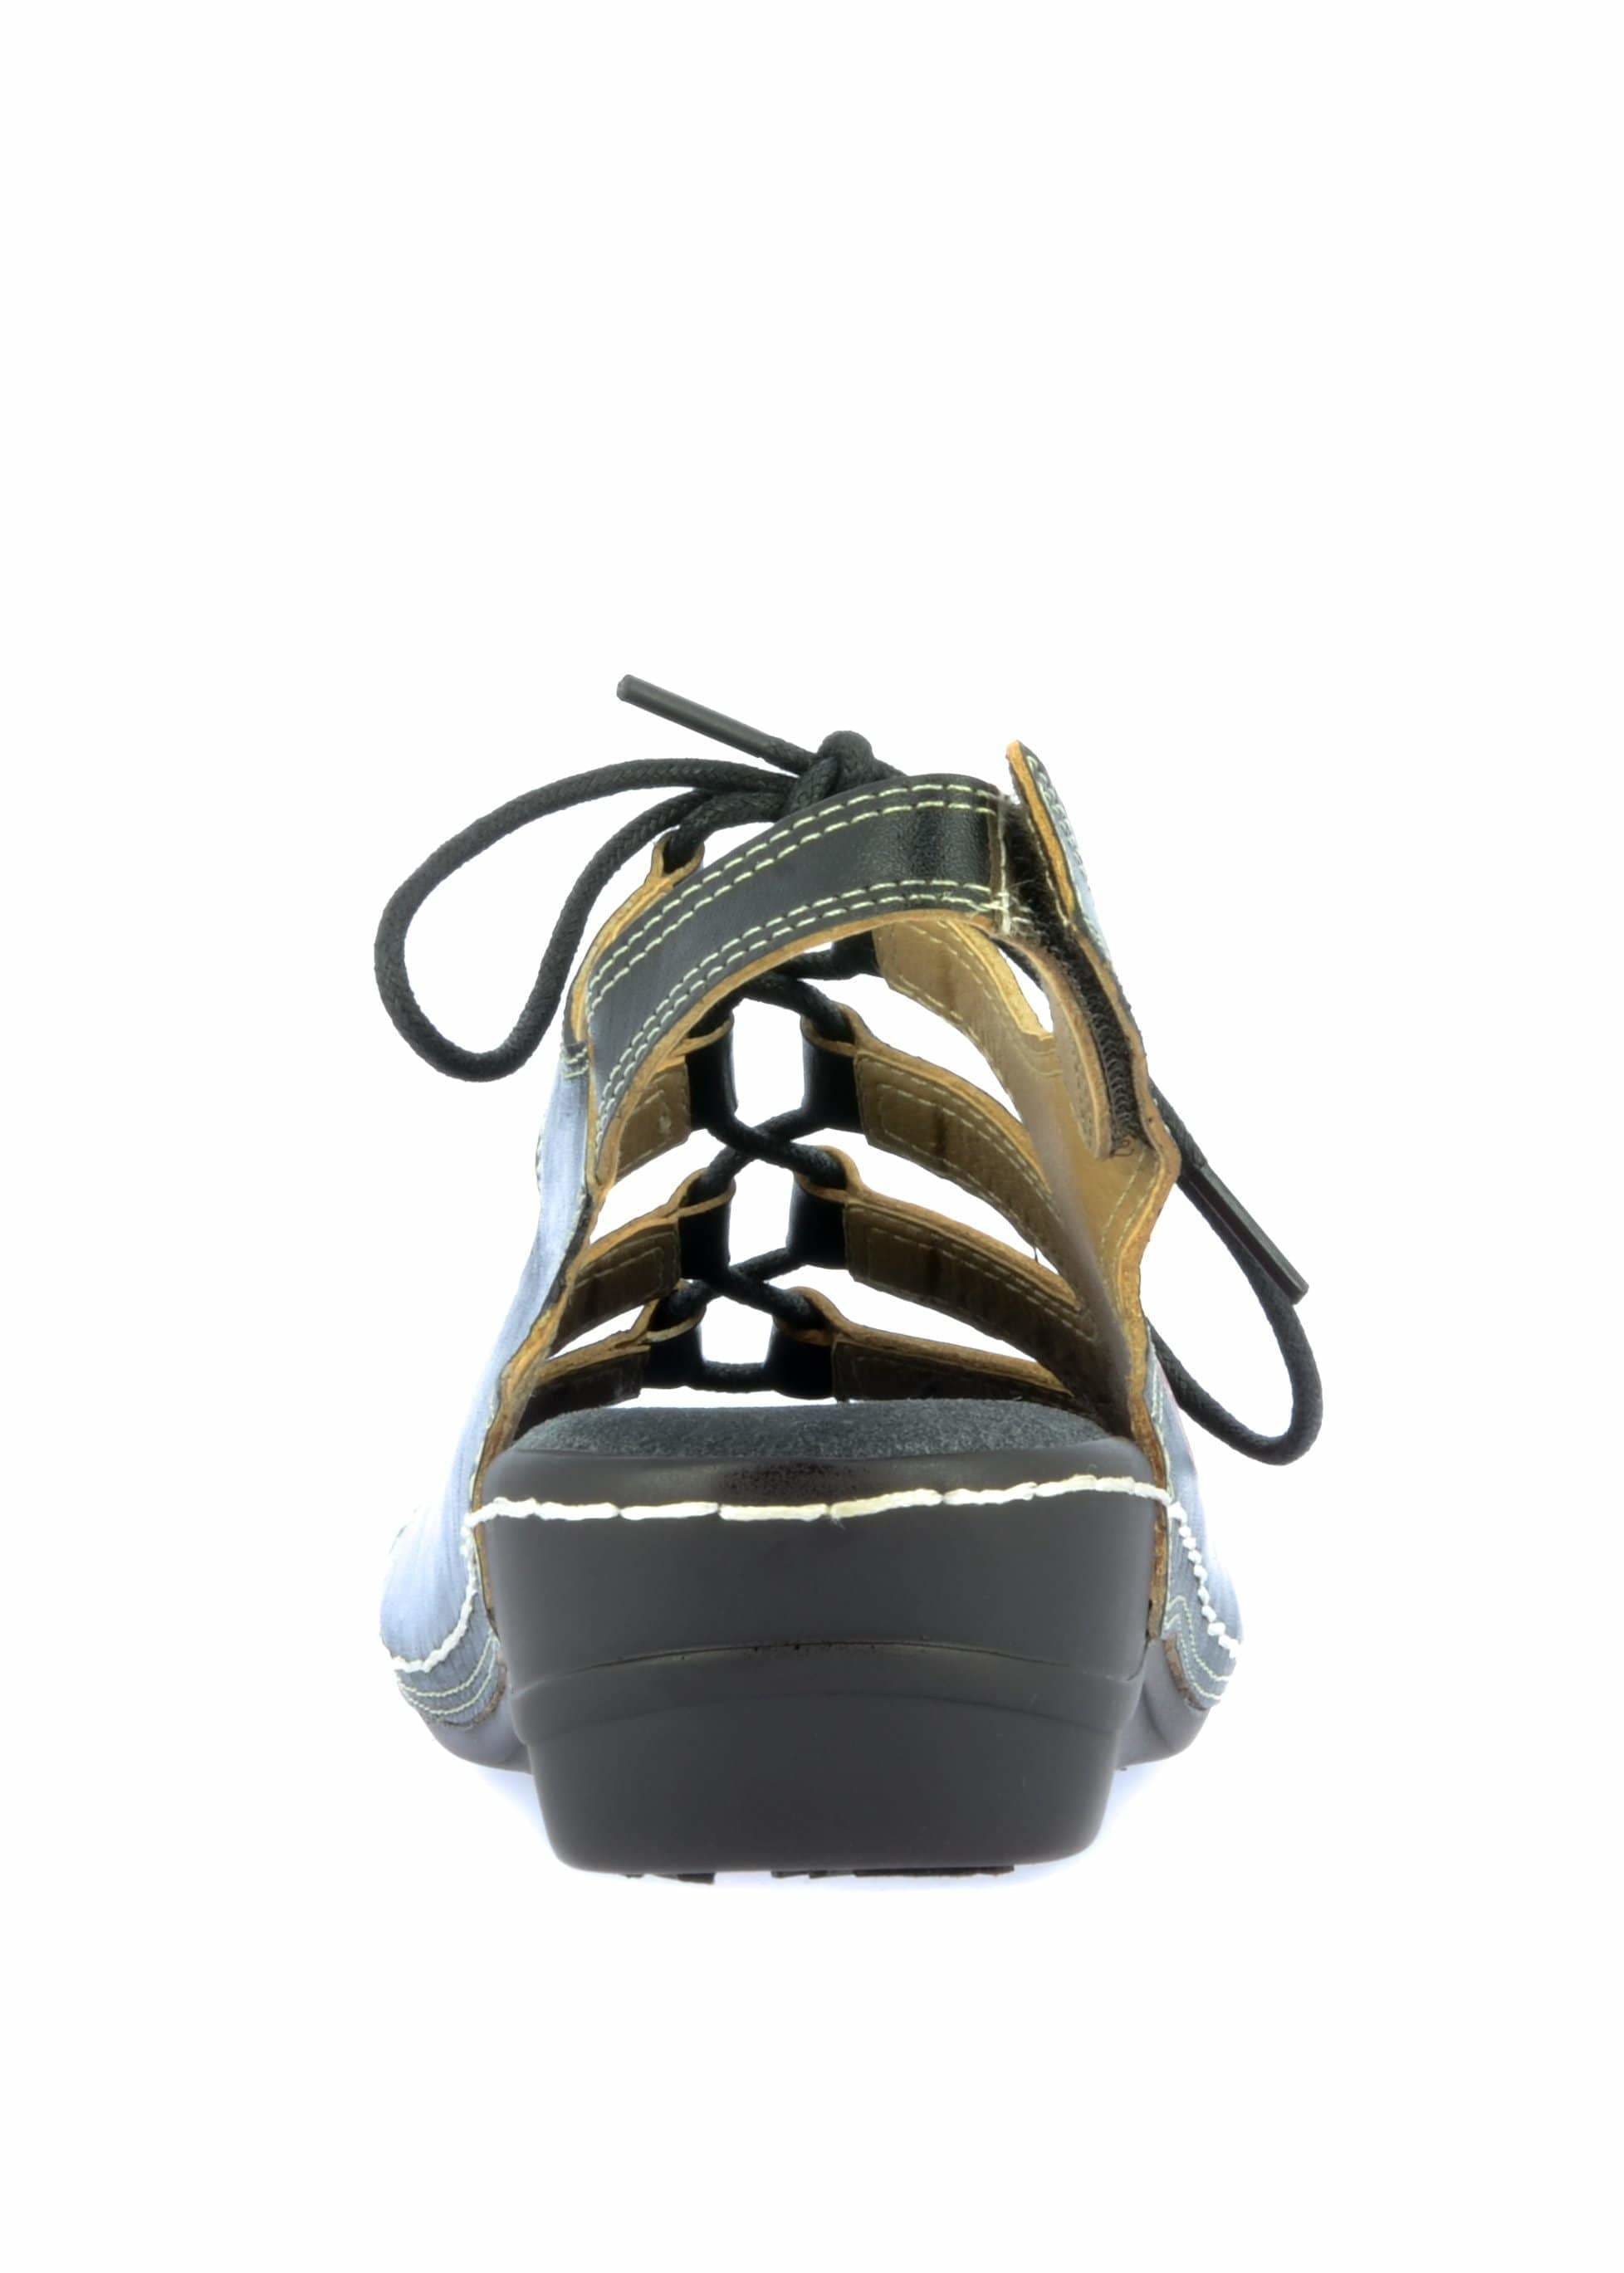 Schuh BICSCUITO11 - Sandale